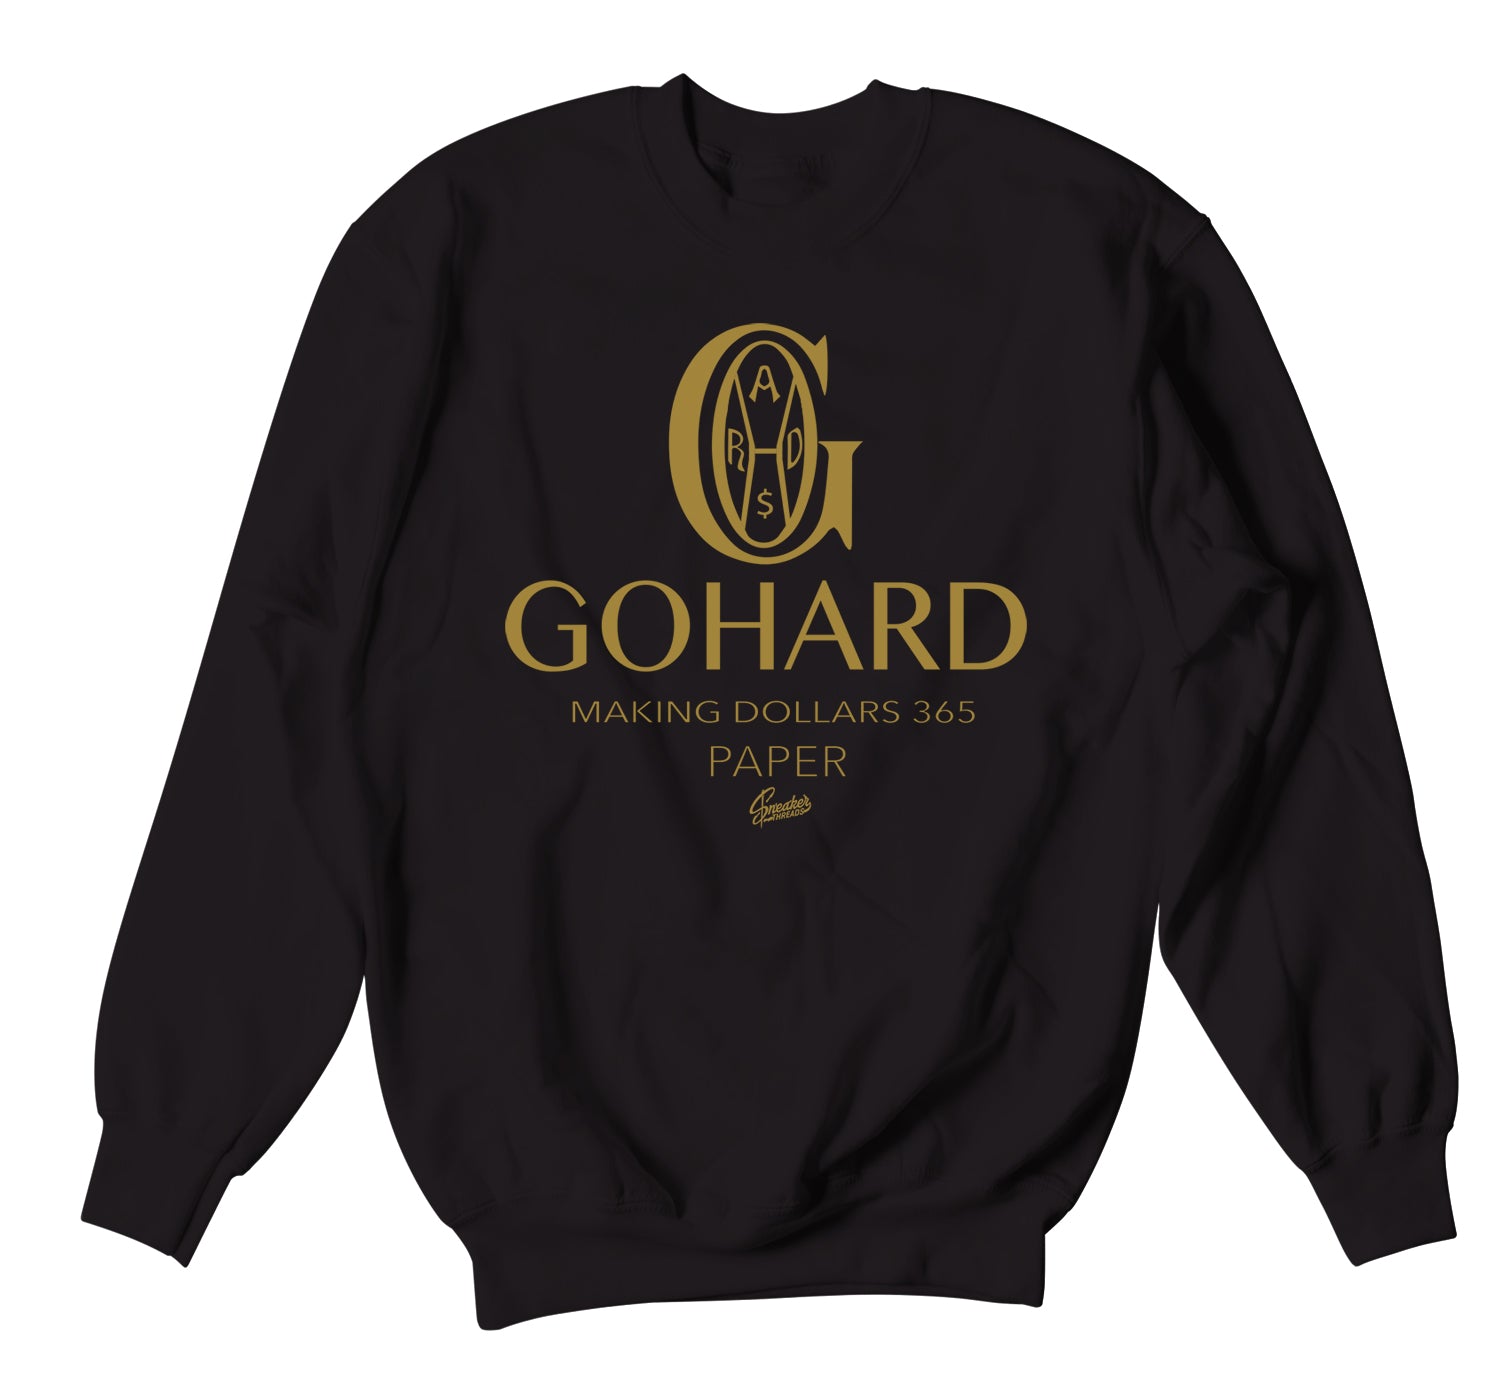 Retro 6 DMP Sweater - Gohard - Black